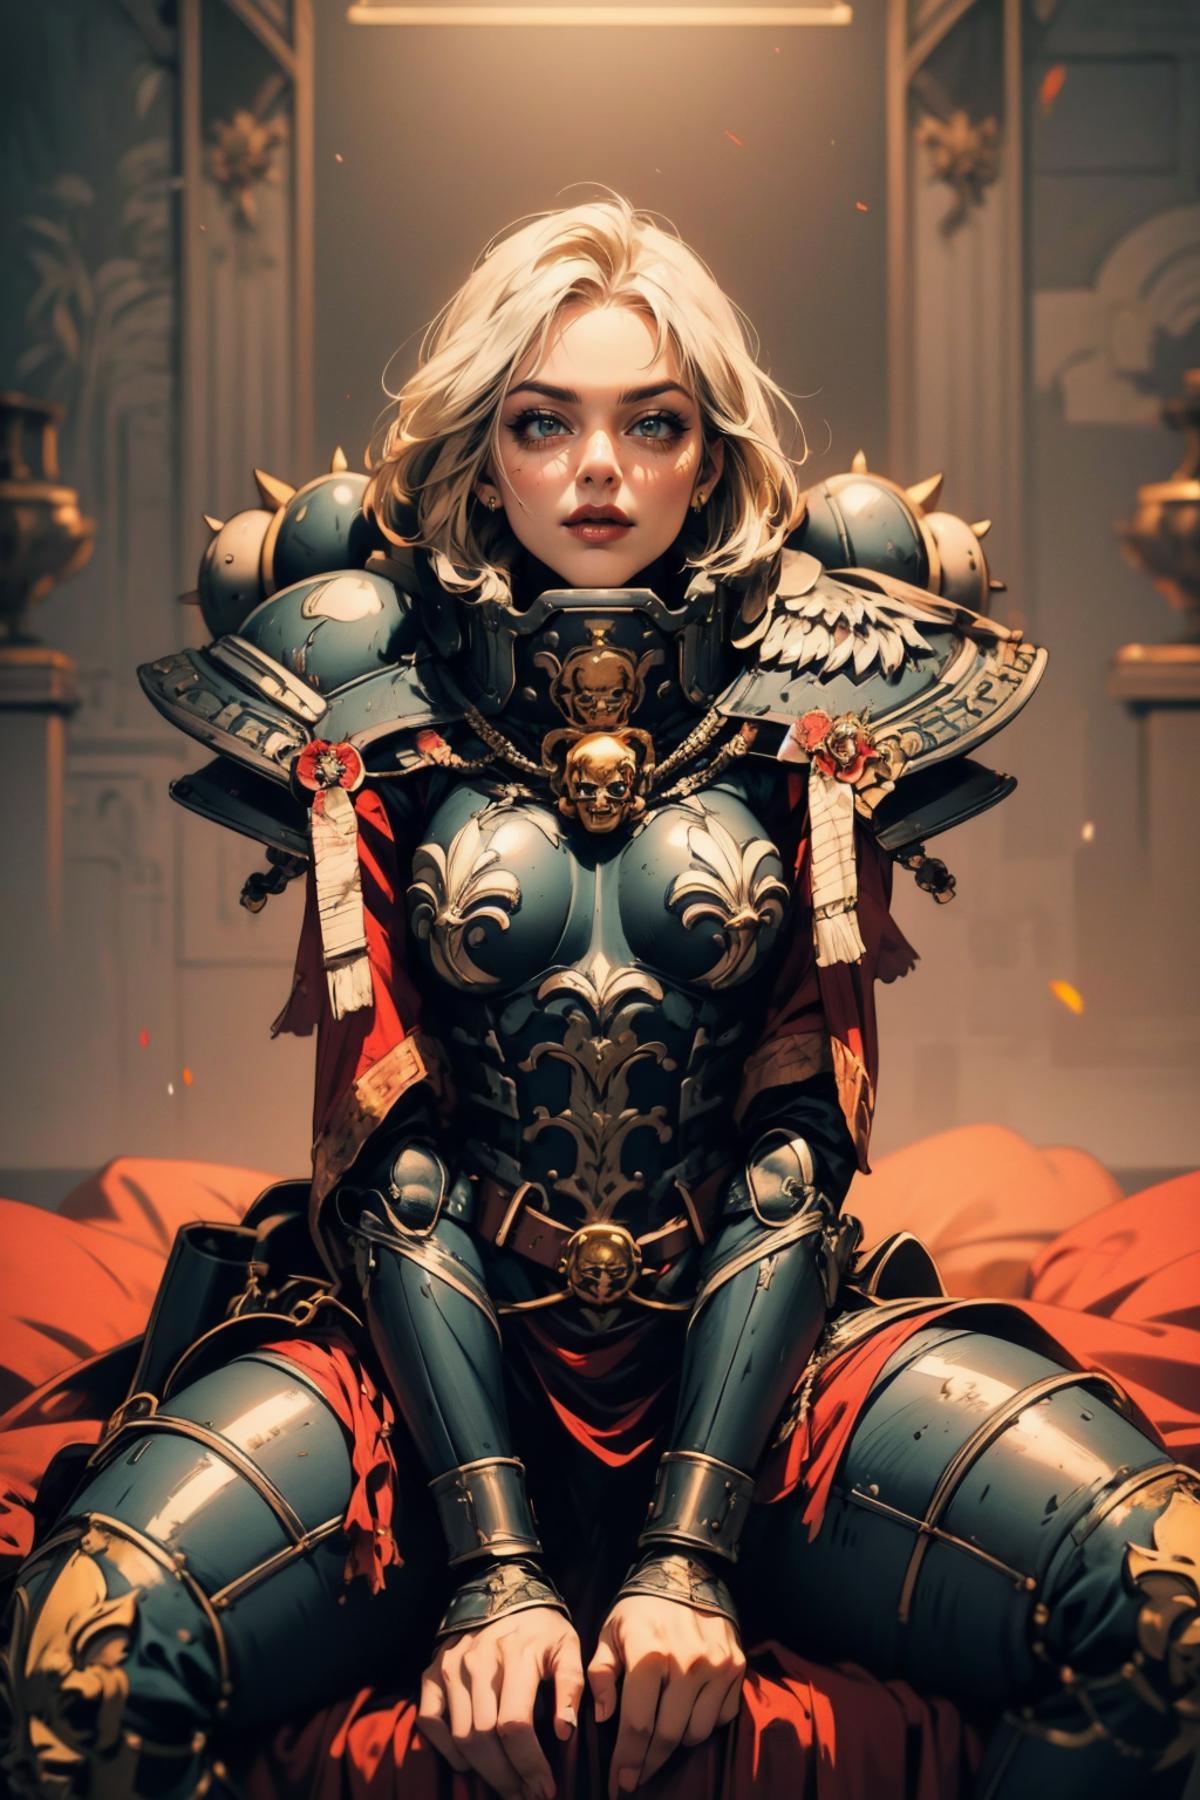 Warhammer 40K Adepta Sororitas Sister of Battle armor - by EDG image by nullsync